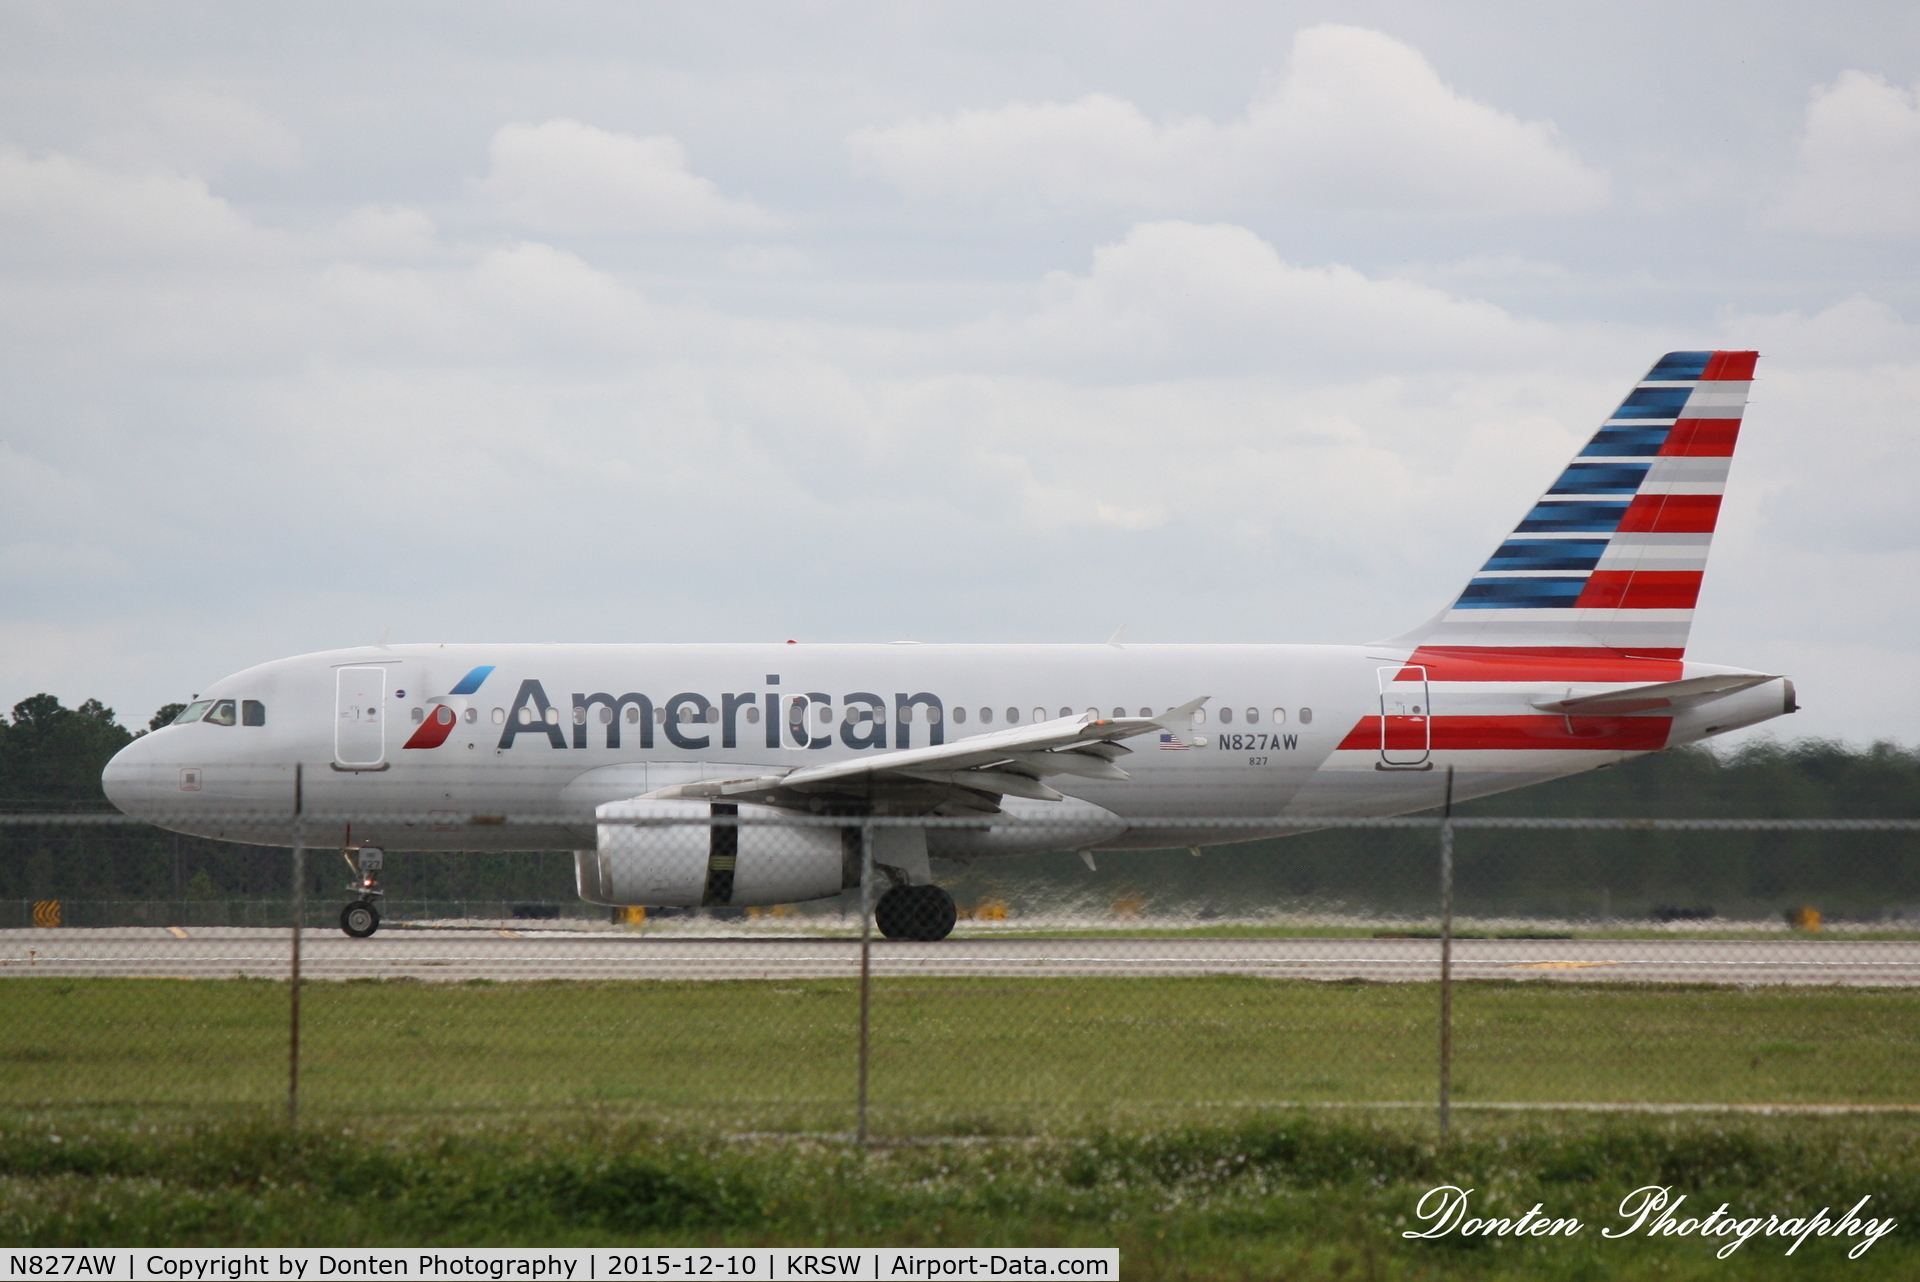 N827AW, 2001 Airbus A319-132 C/N 1547, American Flight 1839 (N827AW) arrives at Southwest Florida International Airport following flight from Philadelphia International Airport